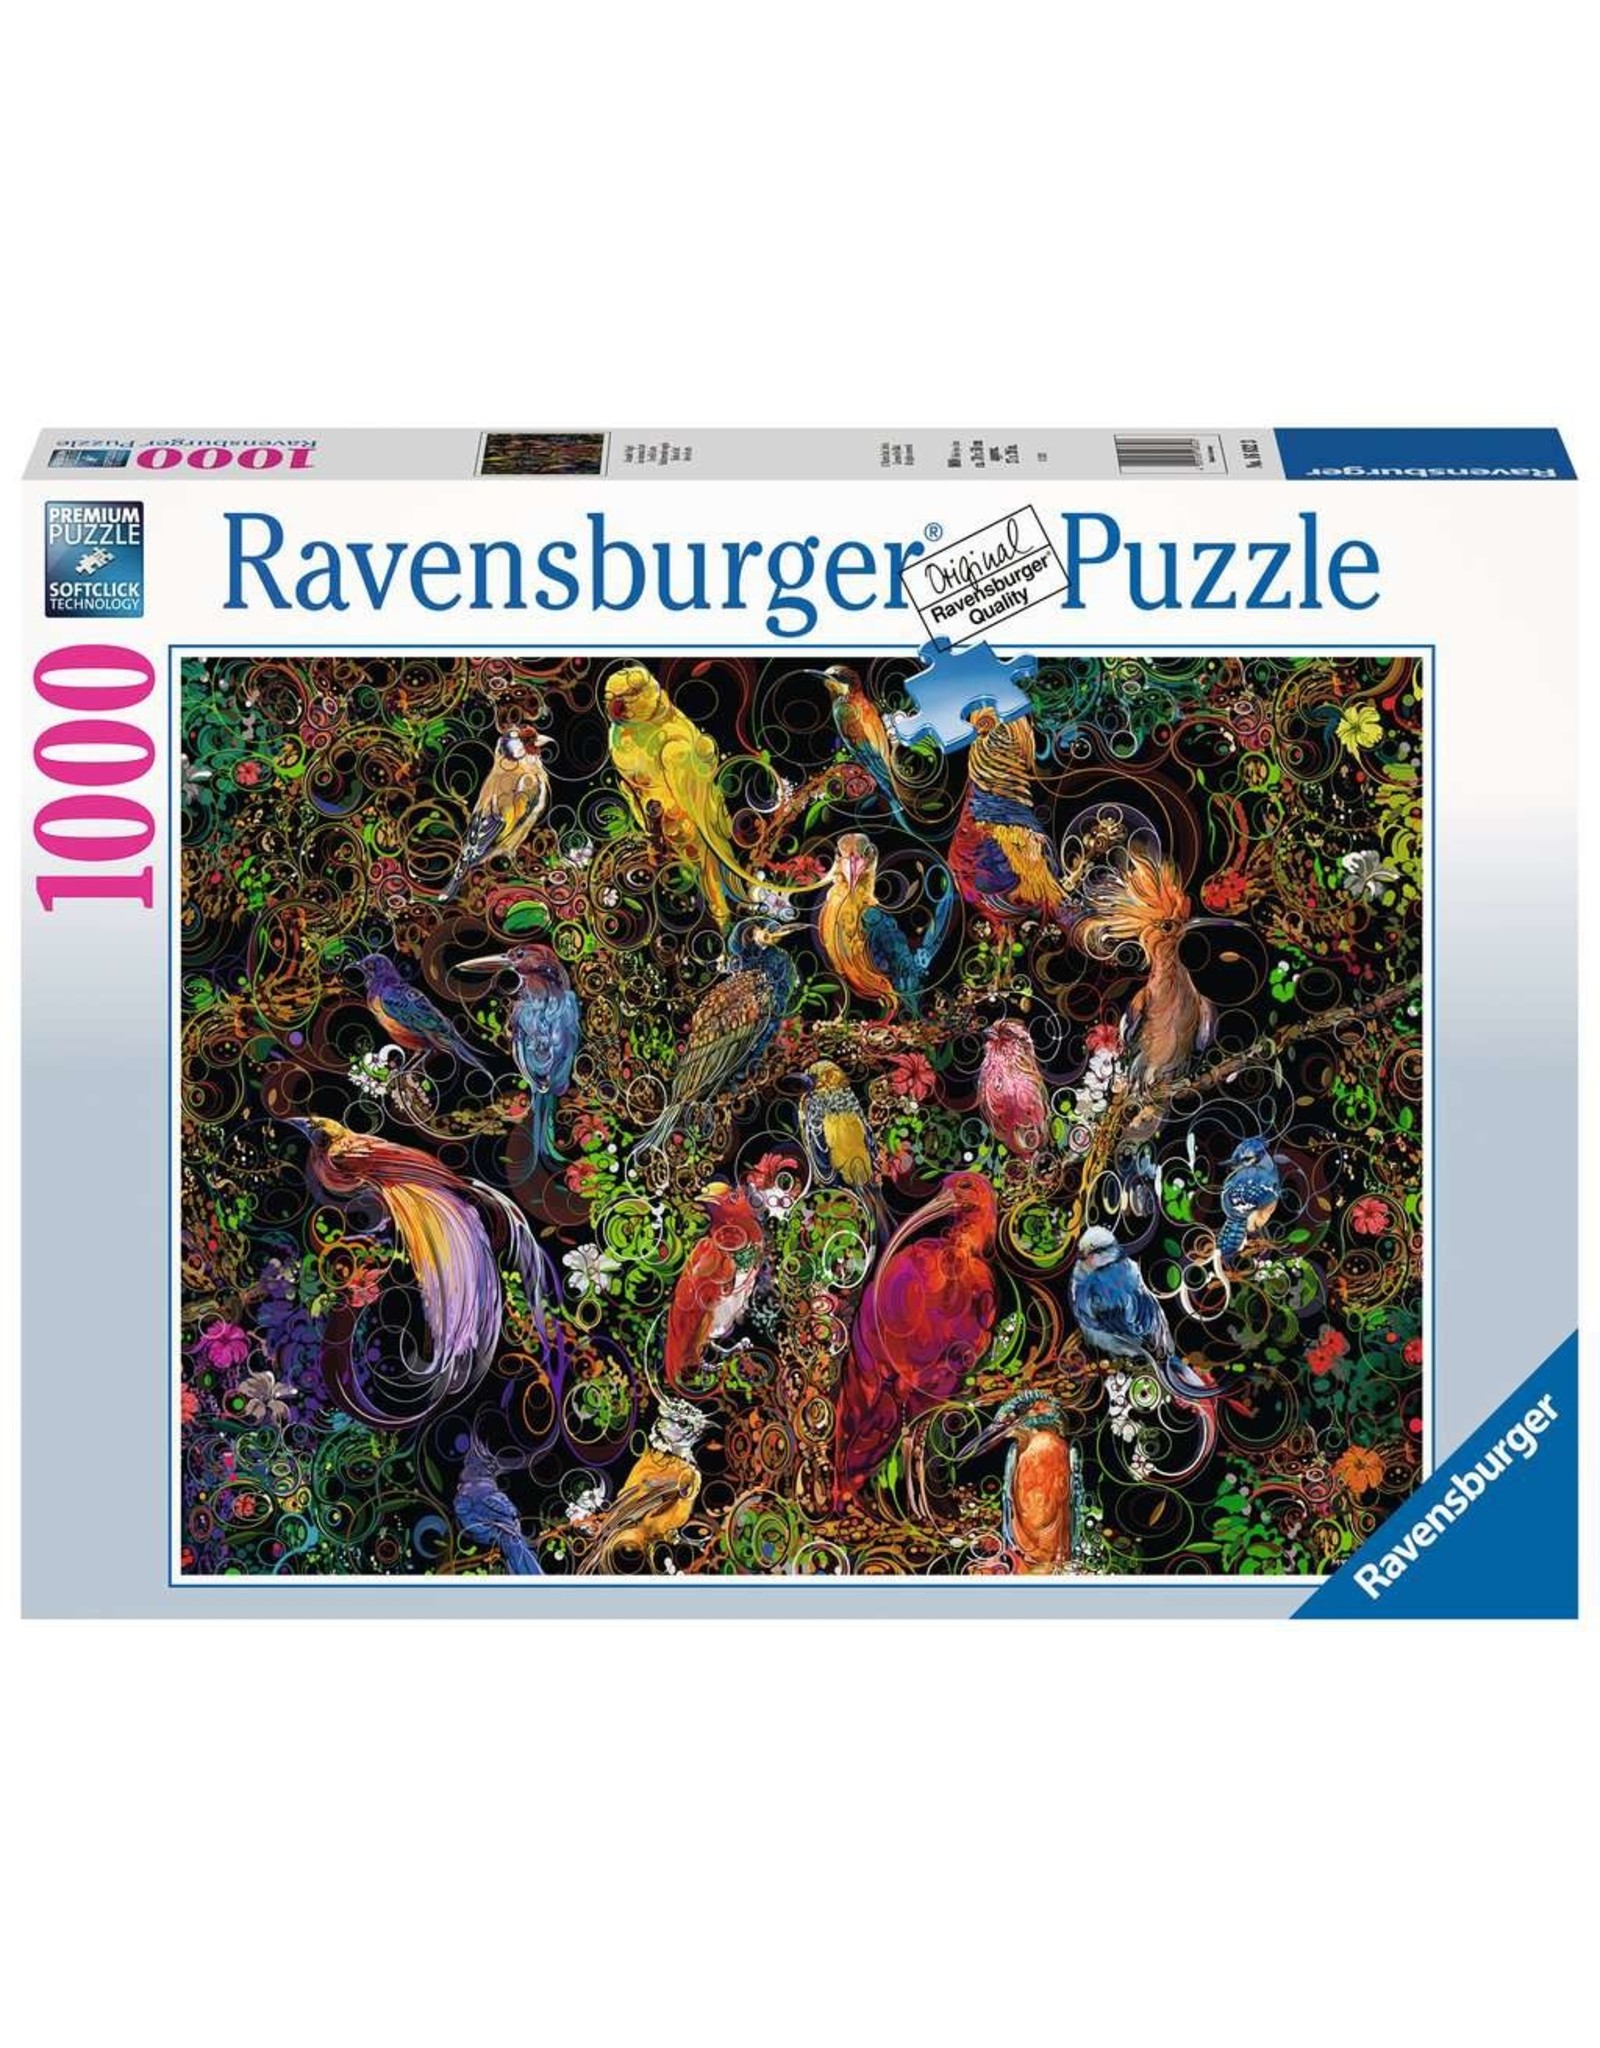 Ravensburger Puzzle Ravensburger 1000 pcs - Birds of art